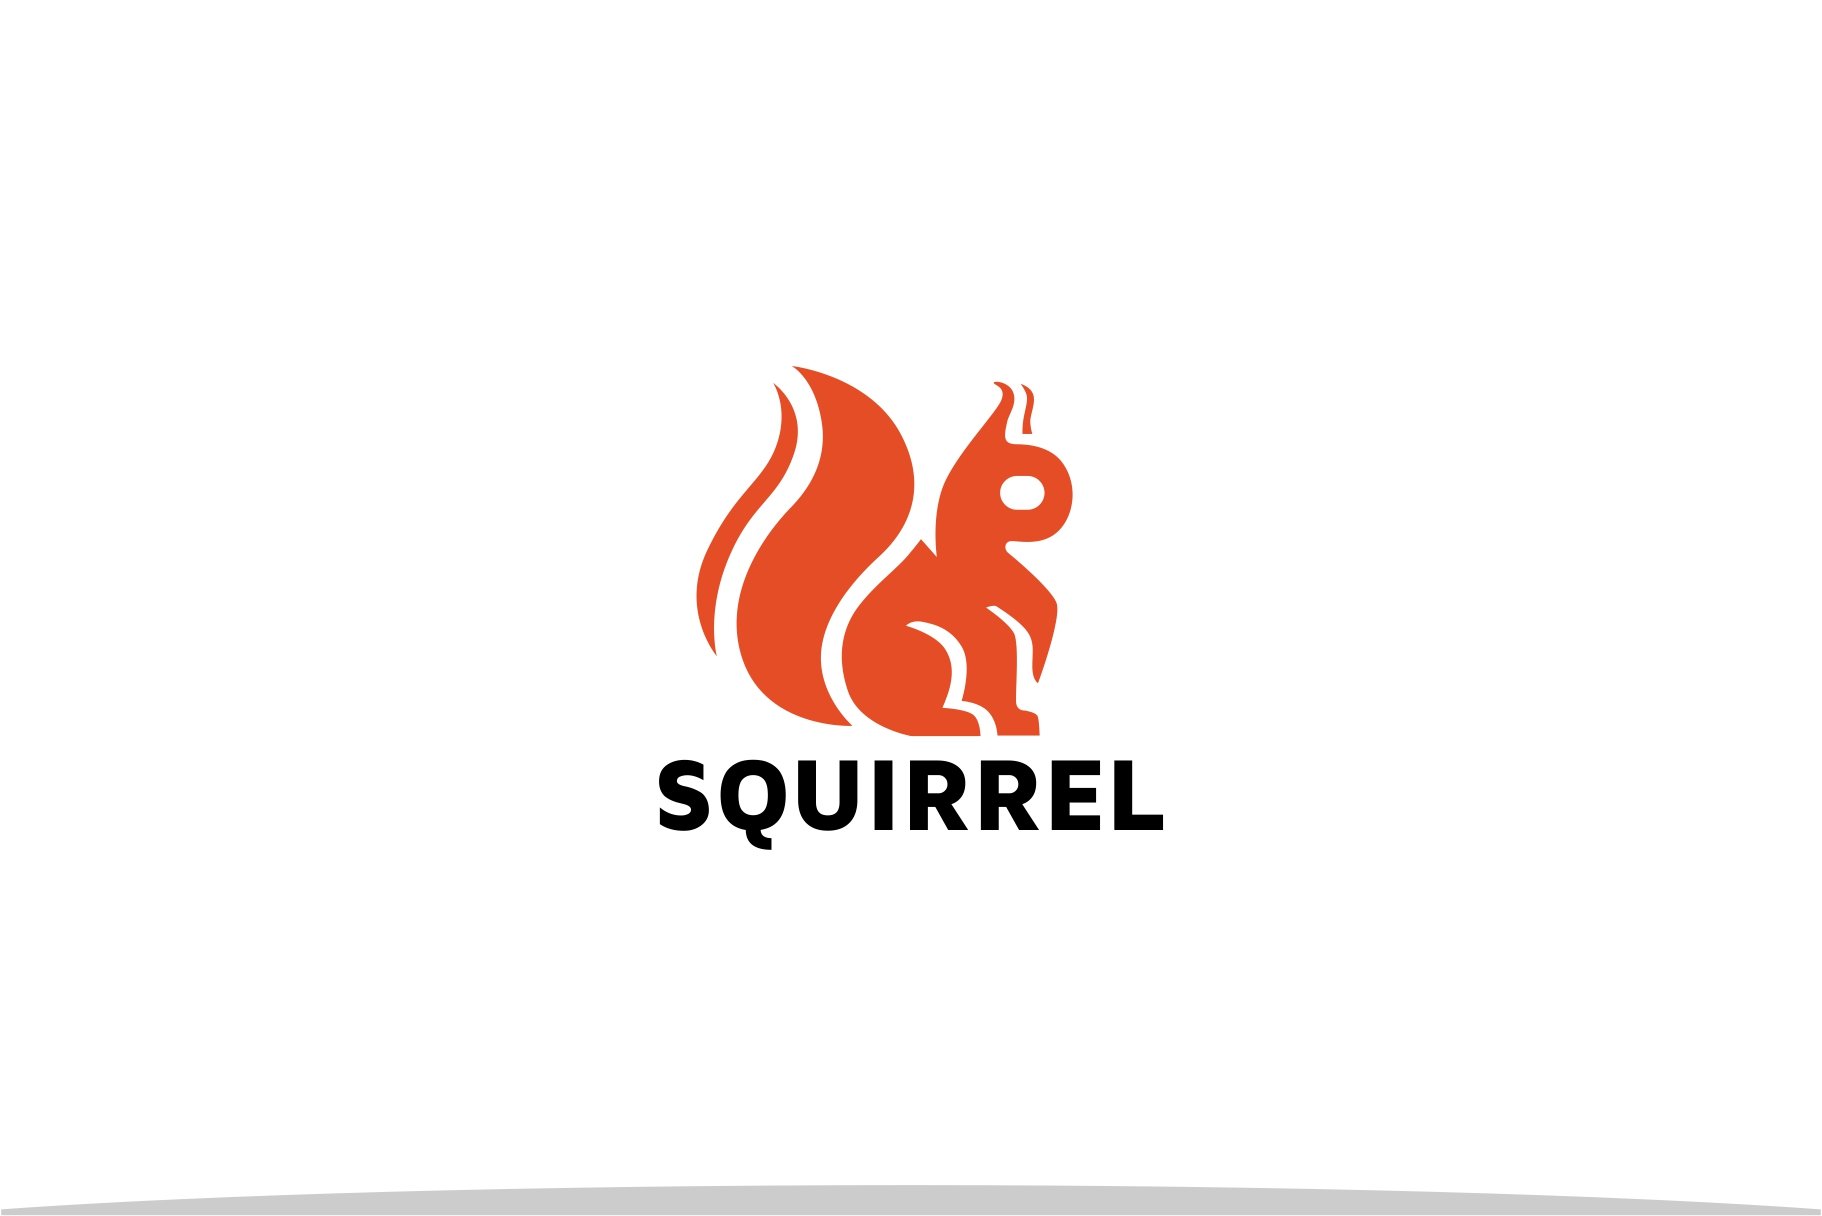 Brown Squirrel Line Art Logo | BrandCrowd Logo Maker